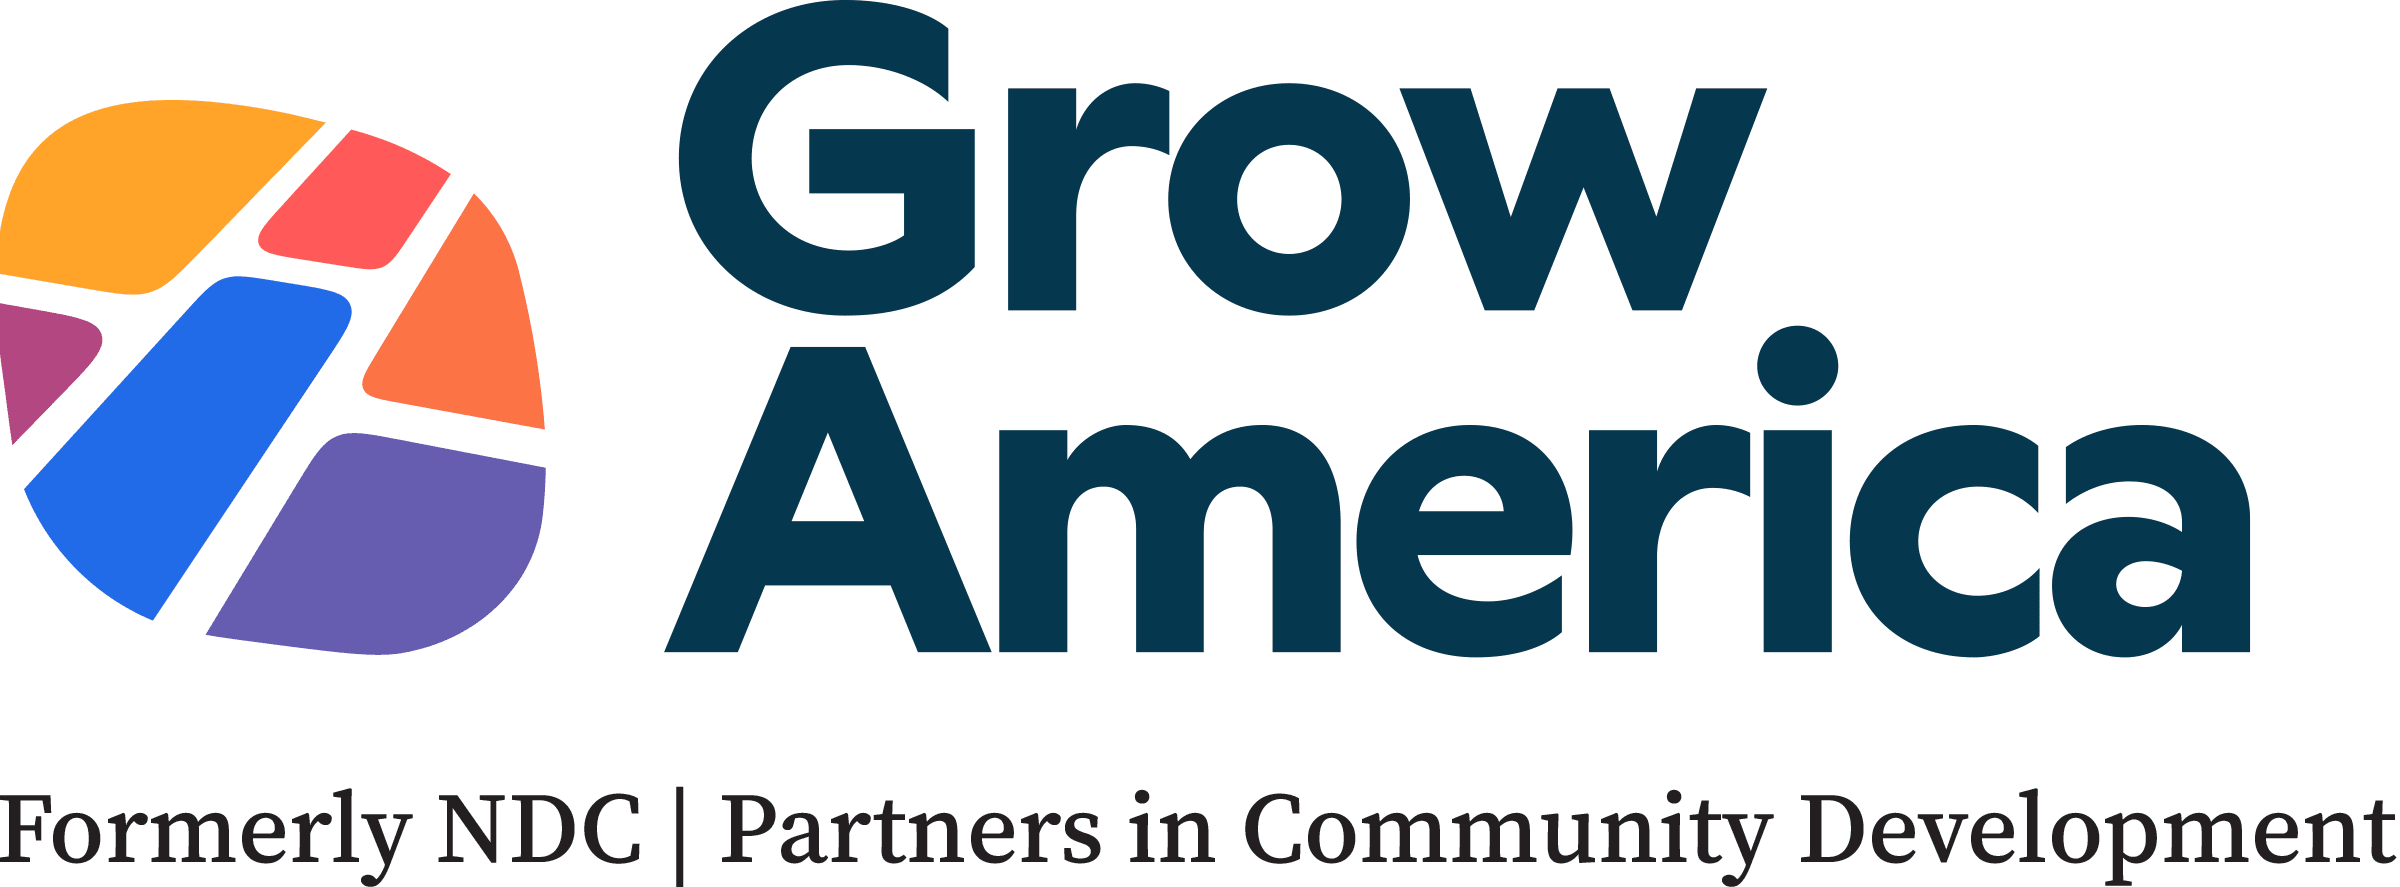 Grow America formerly NDC logo